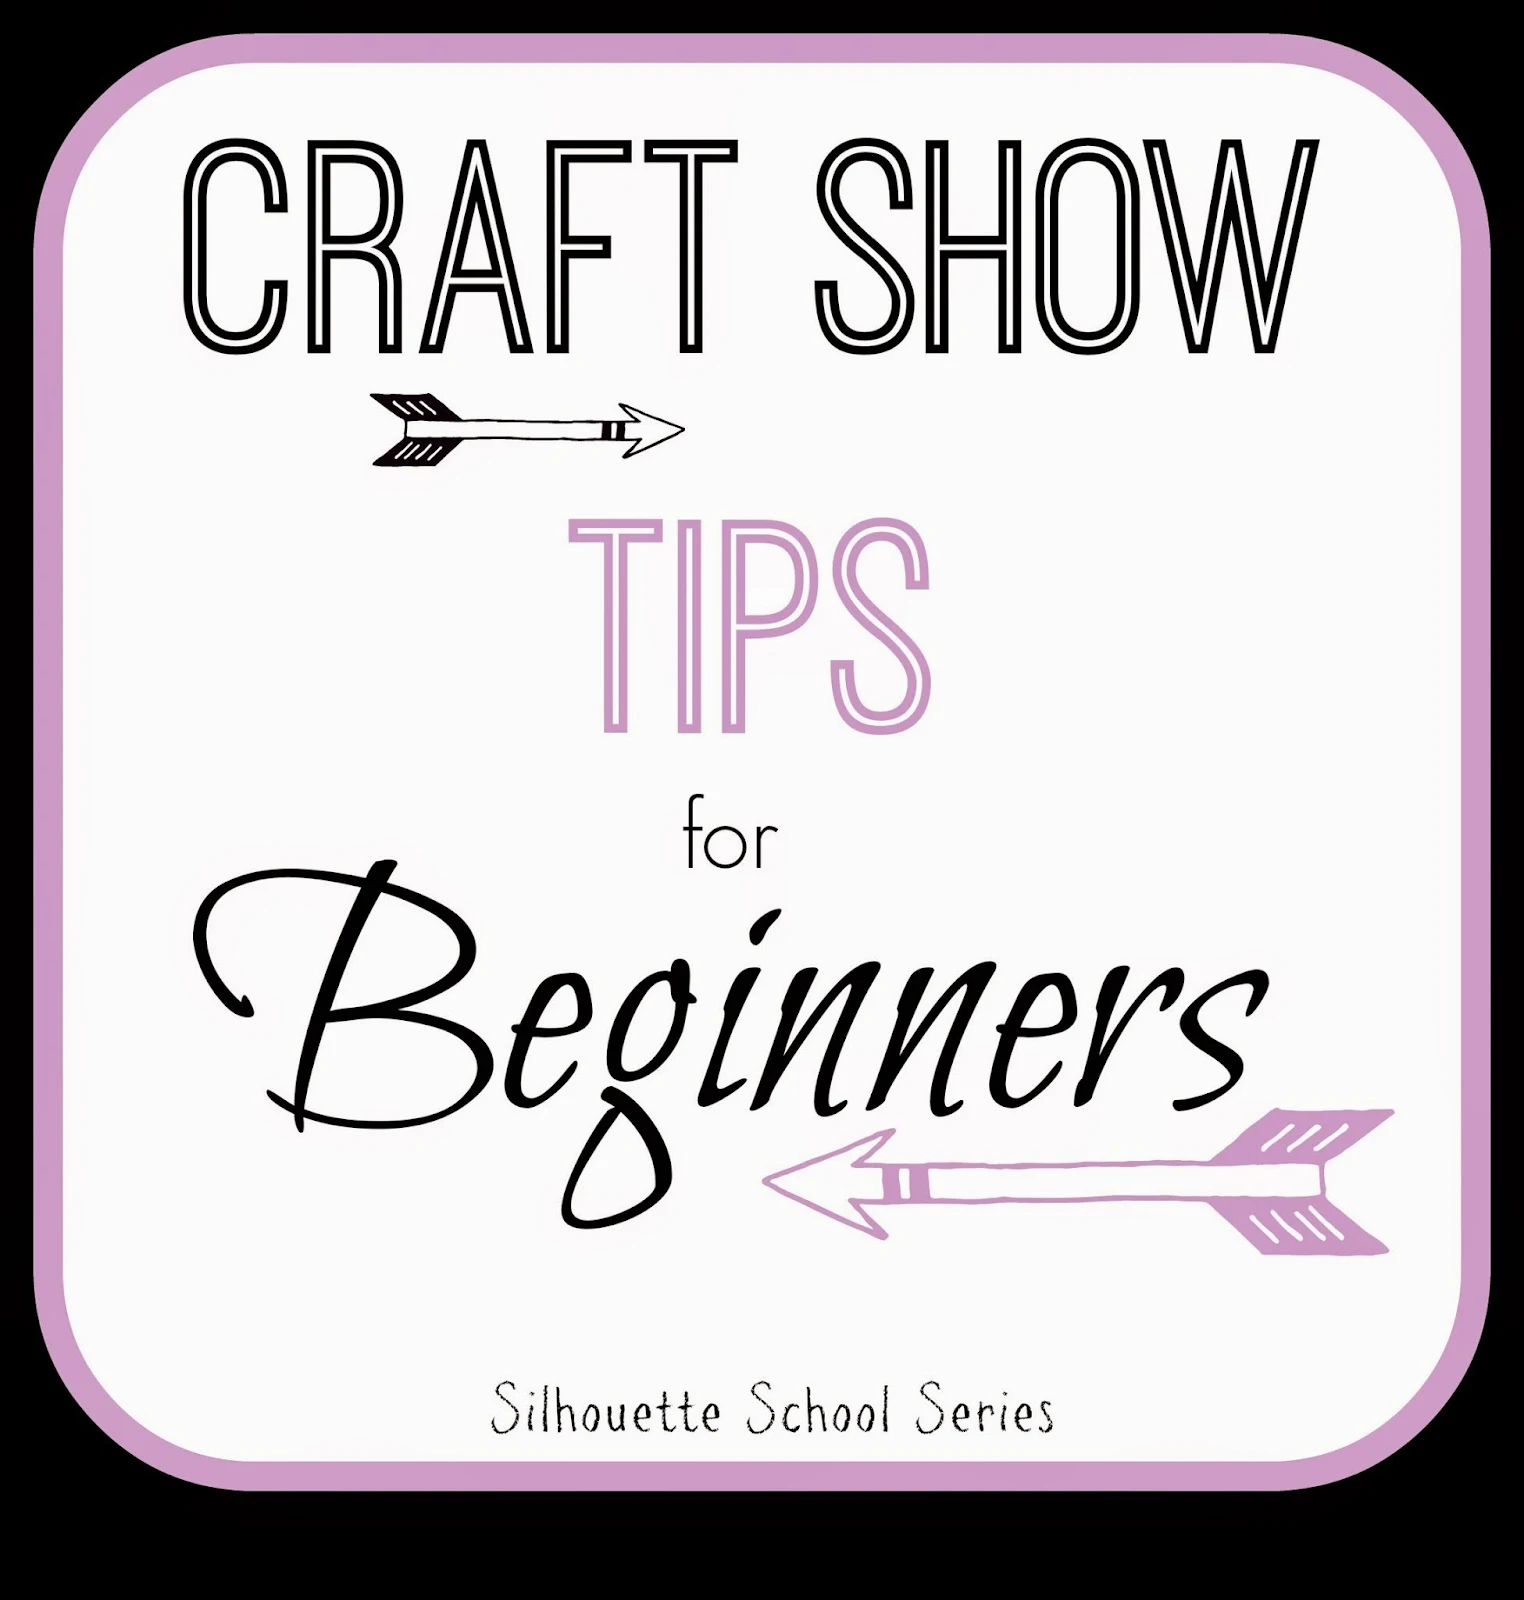 Craft show, tips, beginners